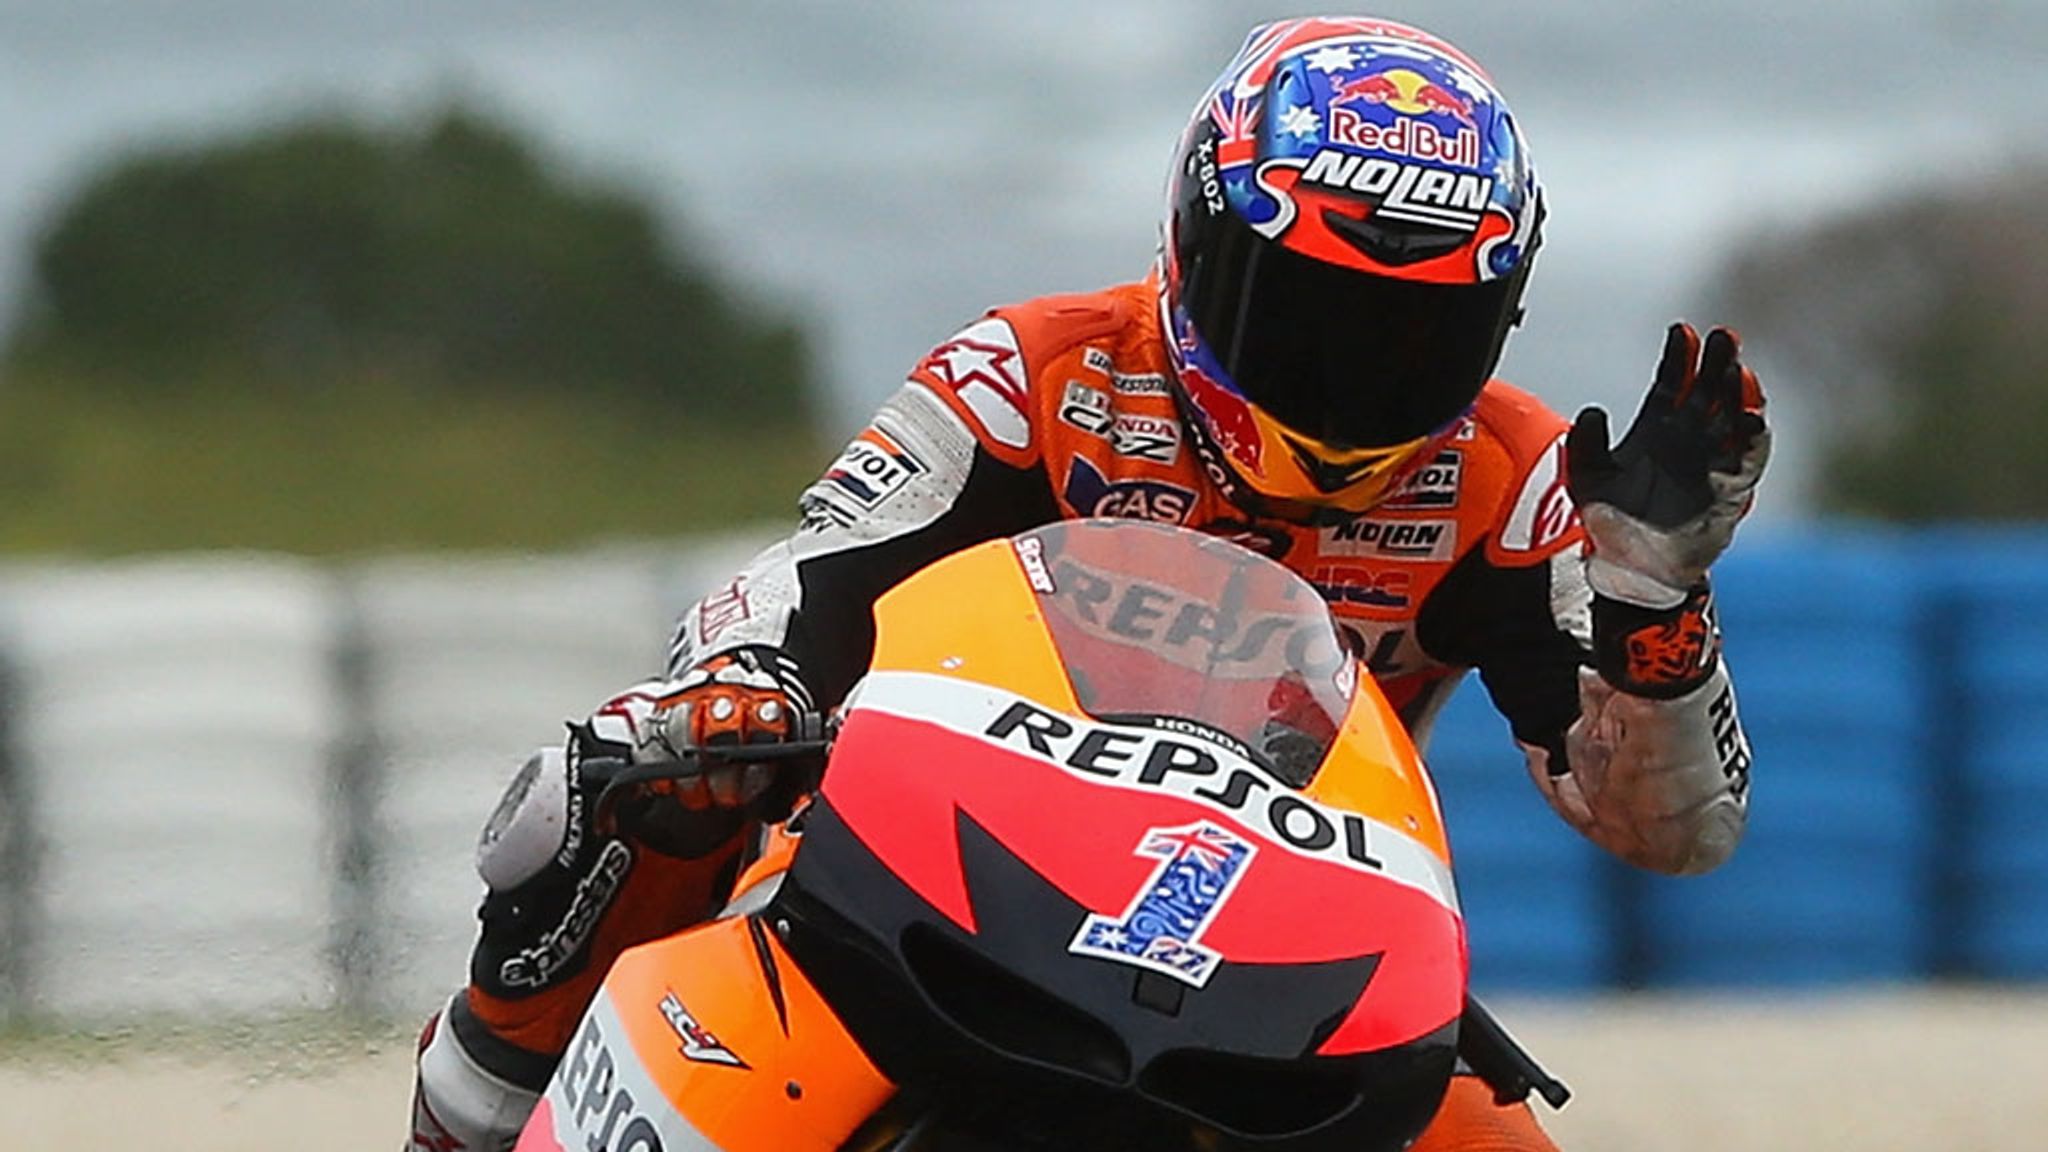 MotoGP Former world champion Casey Stoner to test for Honda Motor Racing News Sky Sports